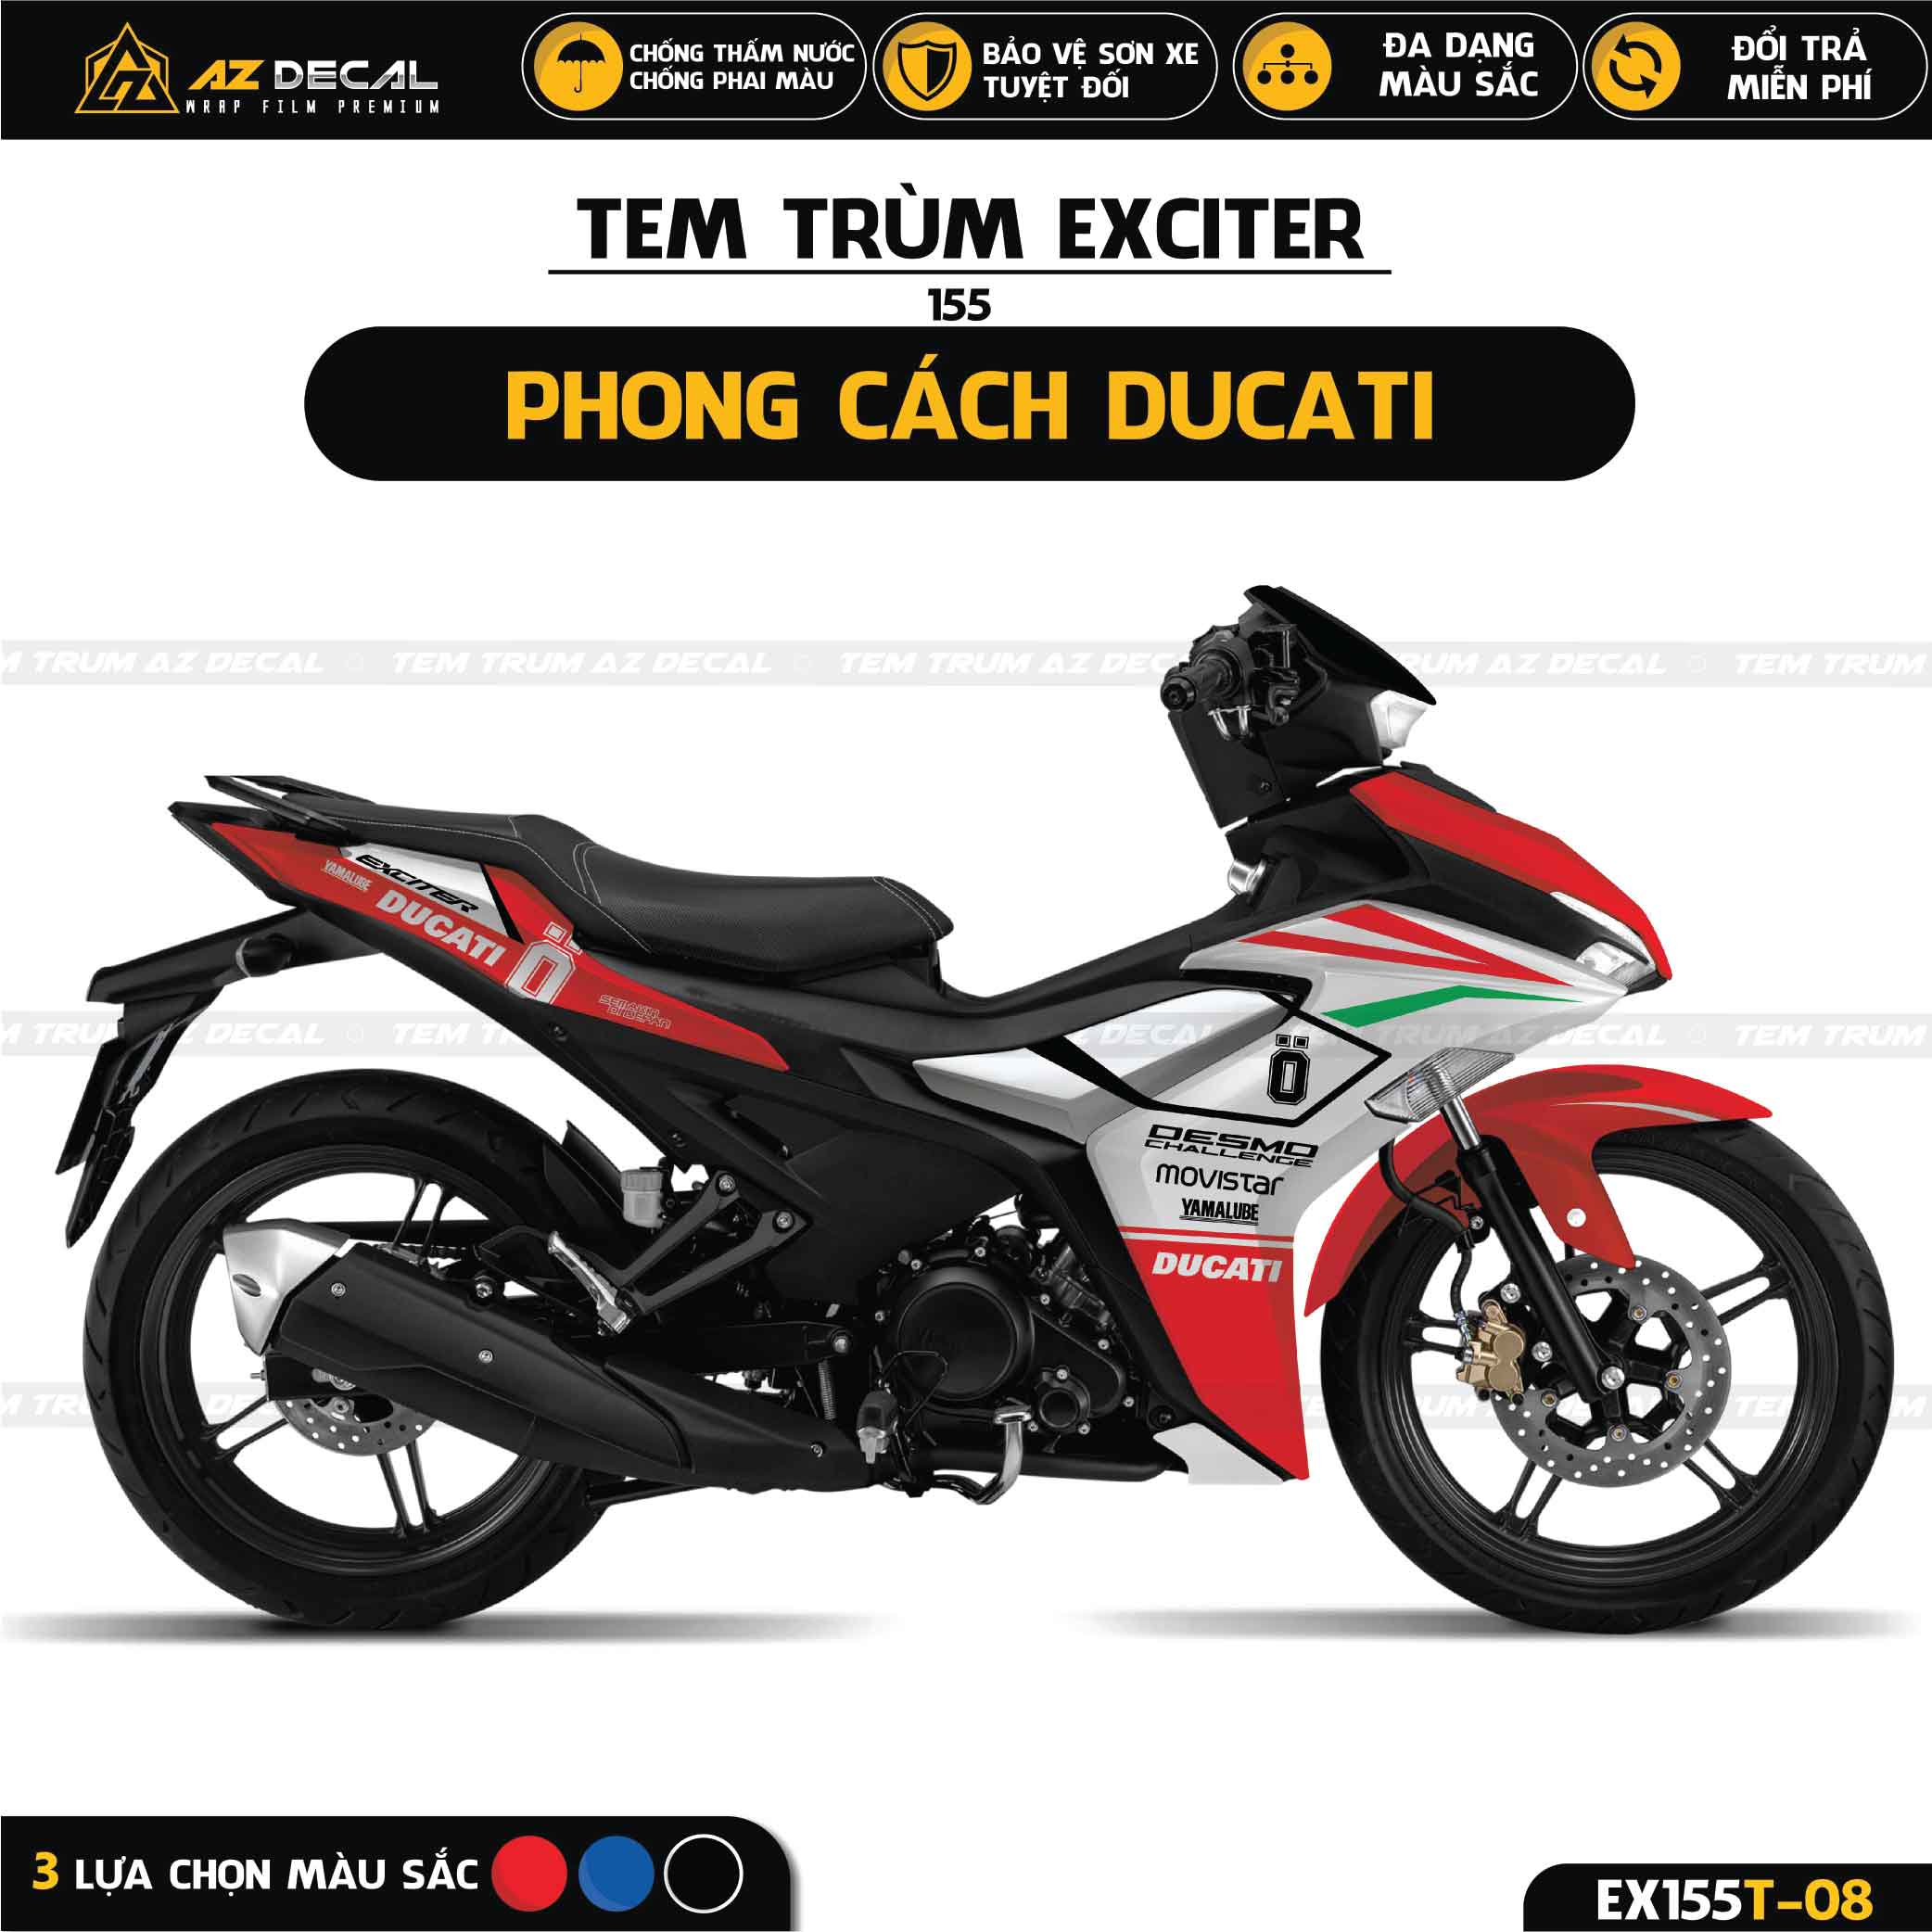 Tem Trùm Exciter 155 Phong Cách Ducati EX155T